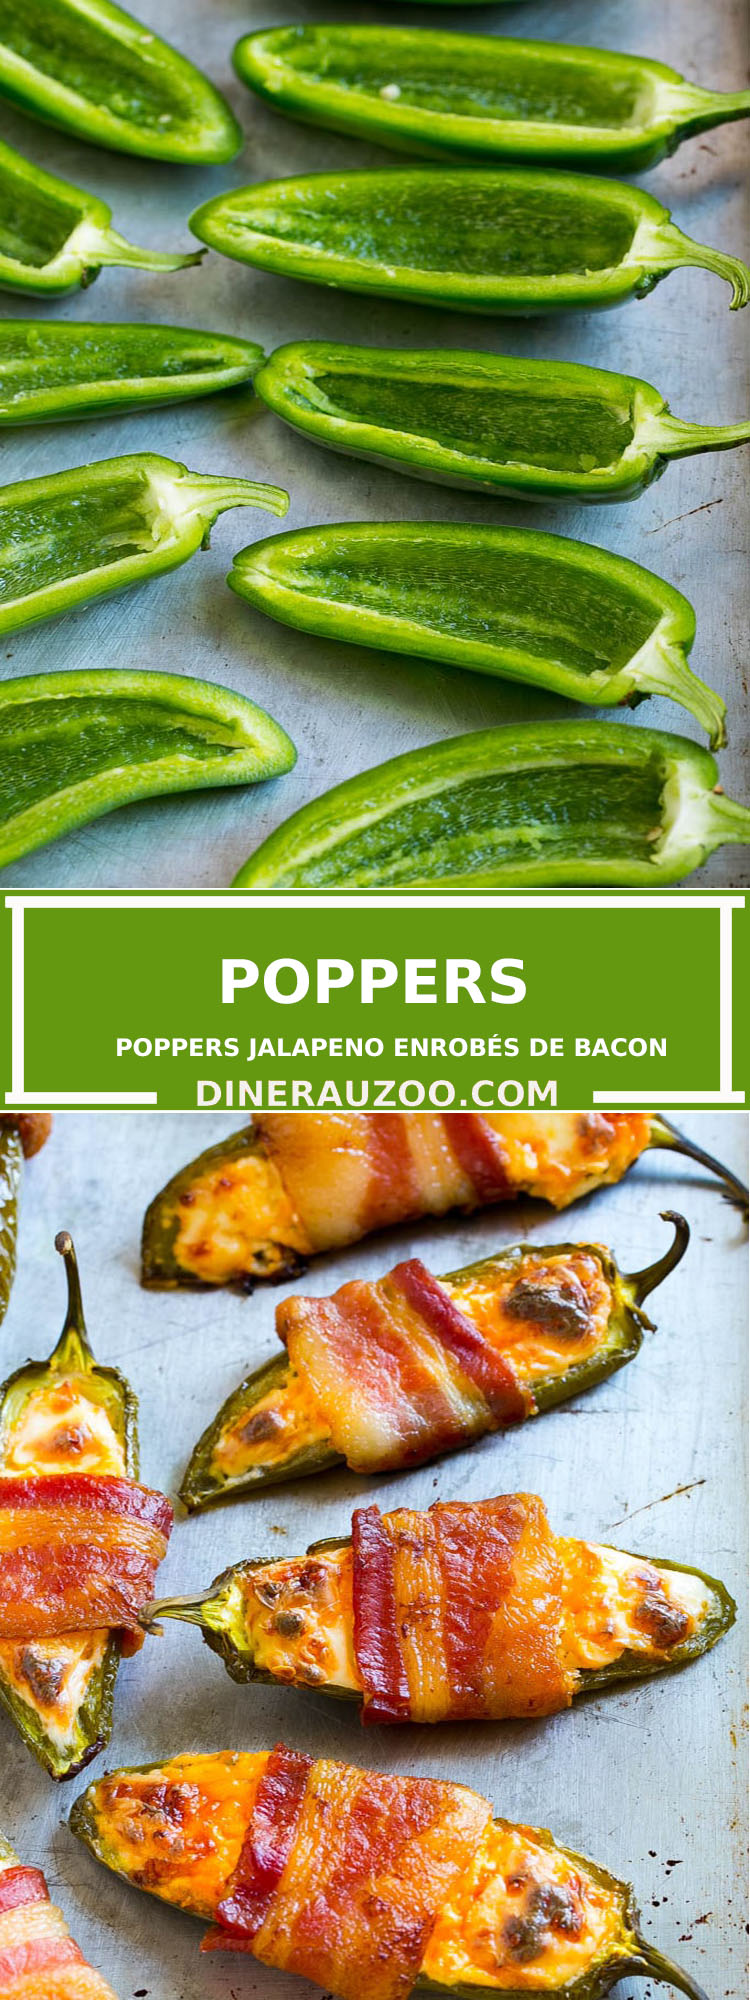 Poppers jalapeno enrobes de bacon1